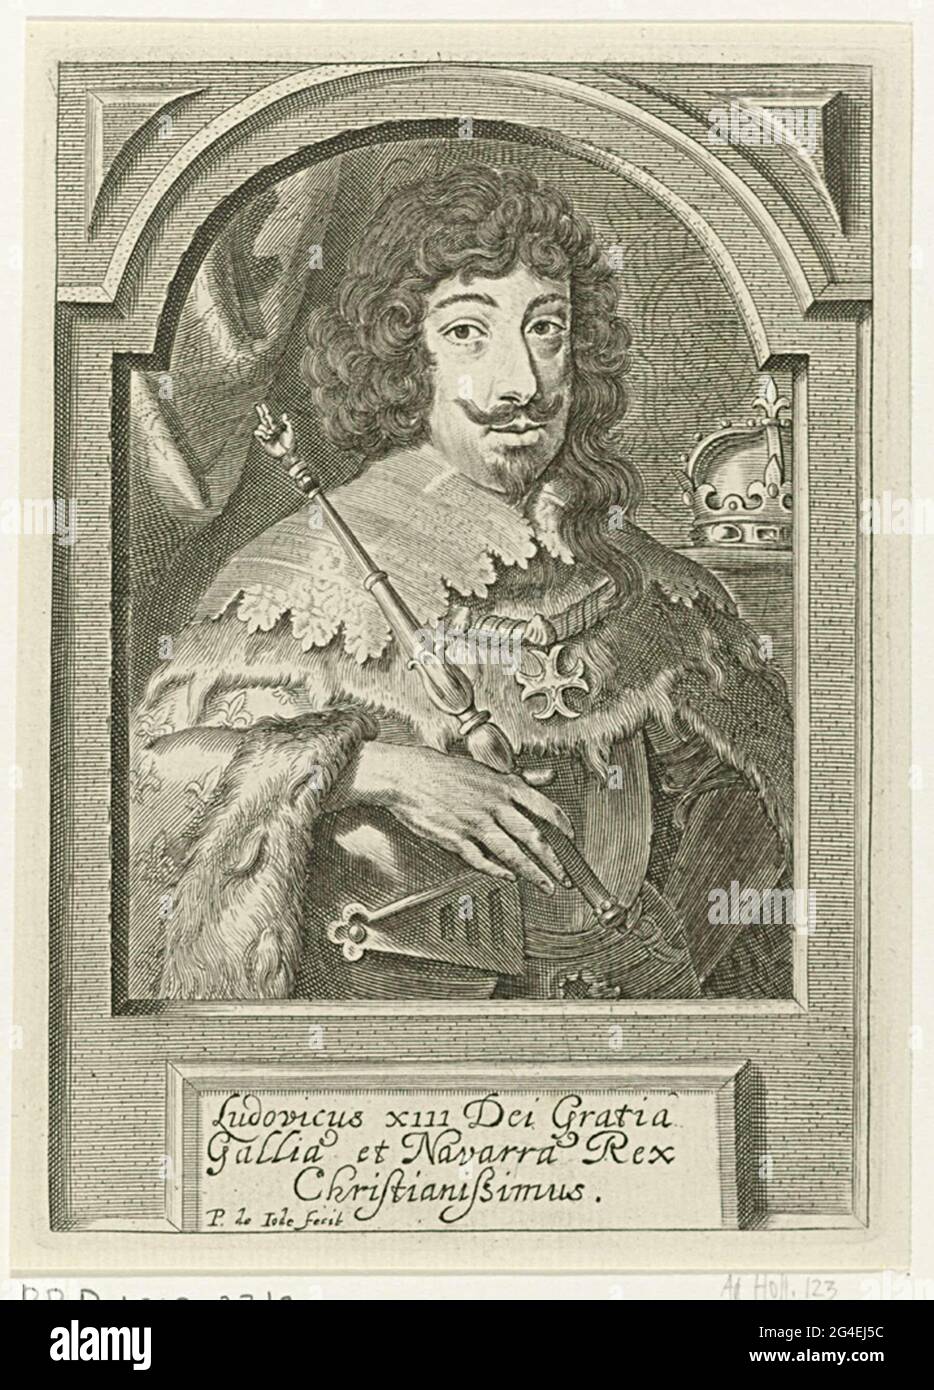 Brief history of Baroque Louis XIII frames.